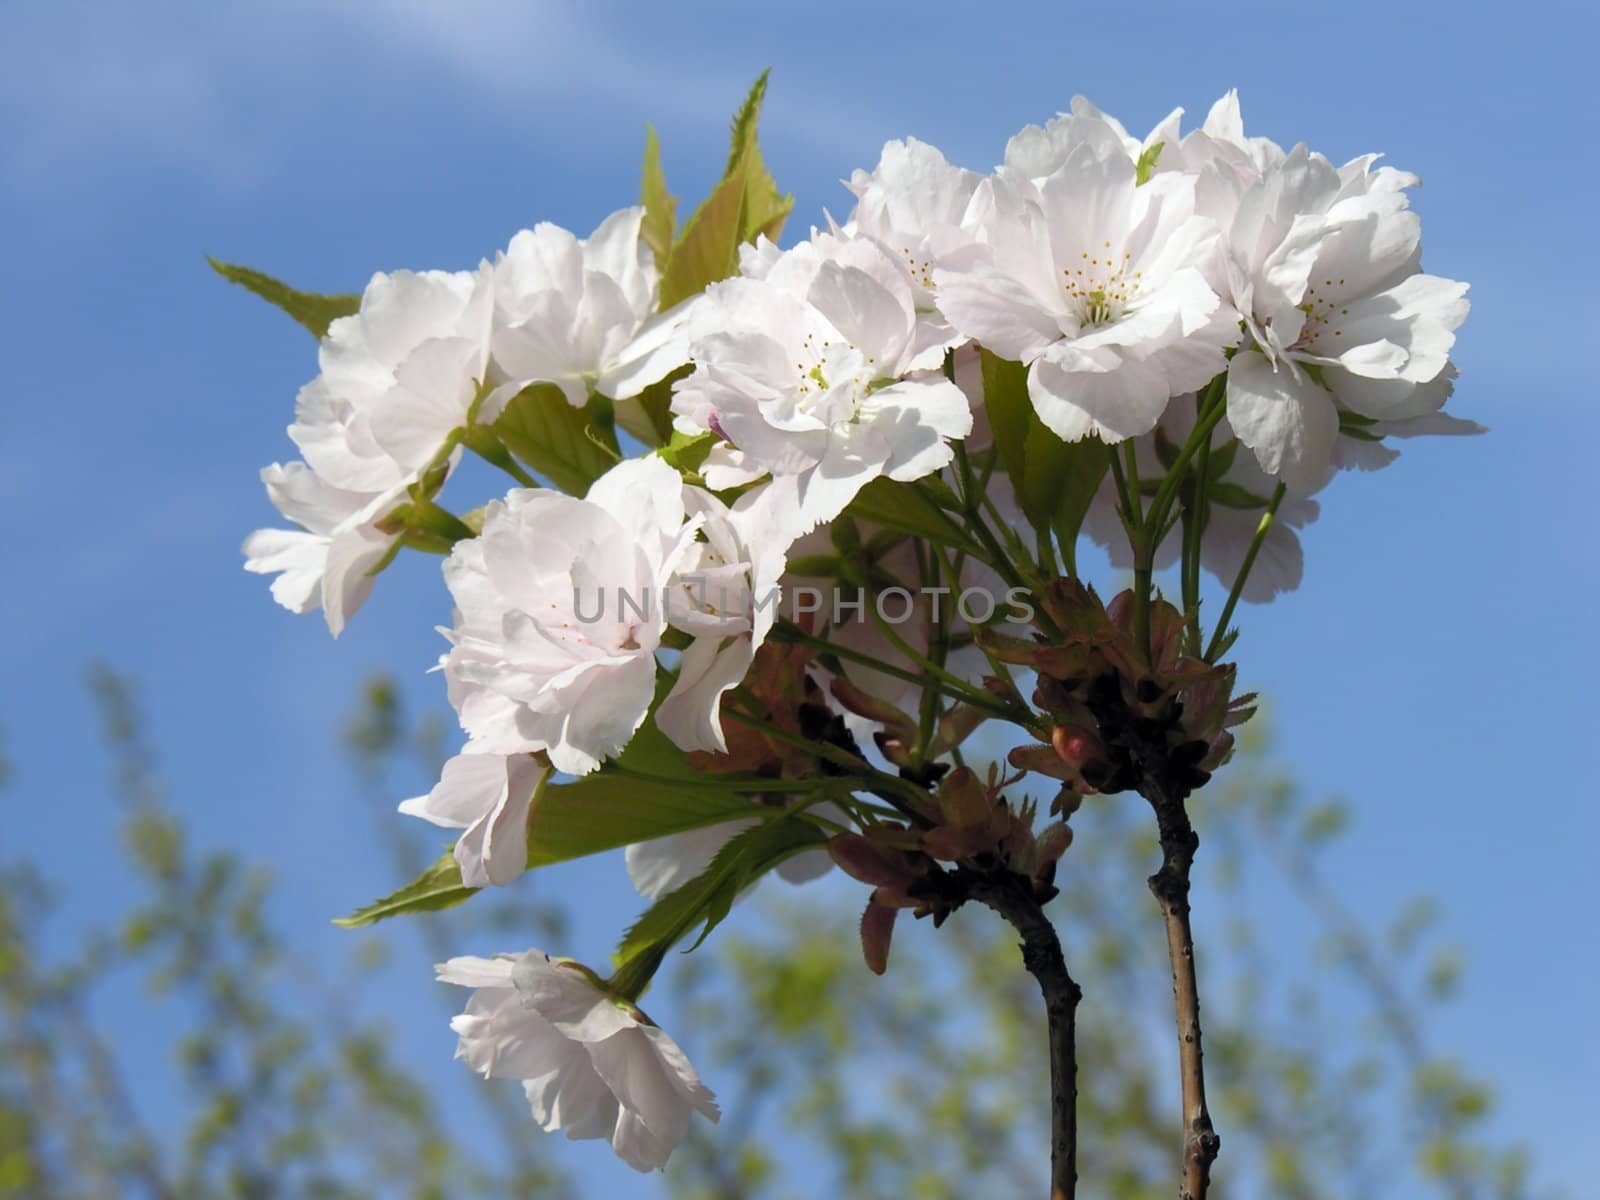 decorative plant in blossom by RAIMA